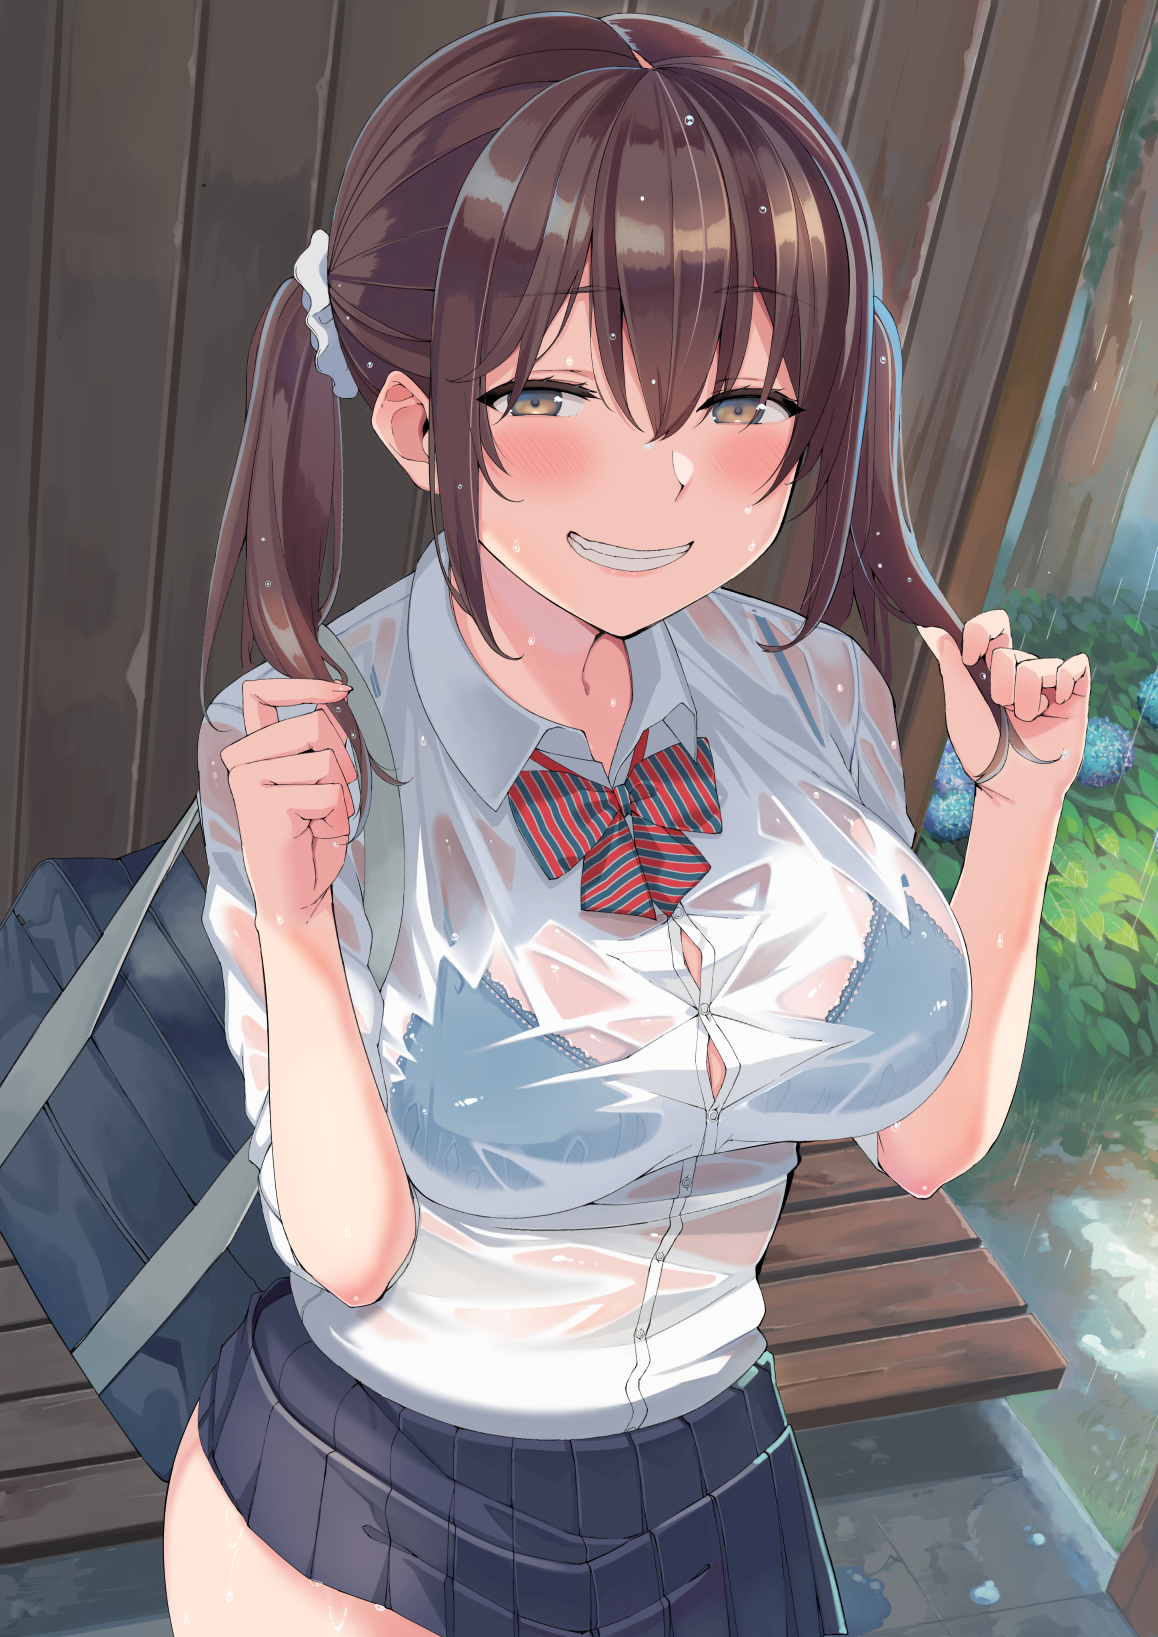 Anime 1158x1637 anime anime girls digital art artwork 2D portrait display wet clothing see-through blouse bra school uniform smiling blushing twintails brunette brown eyes Nuko